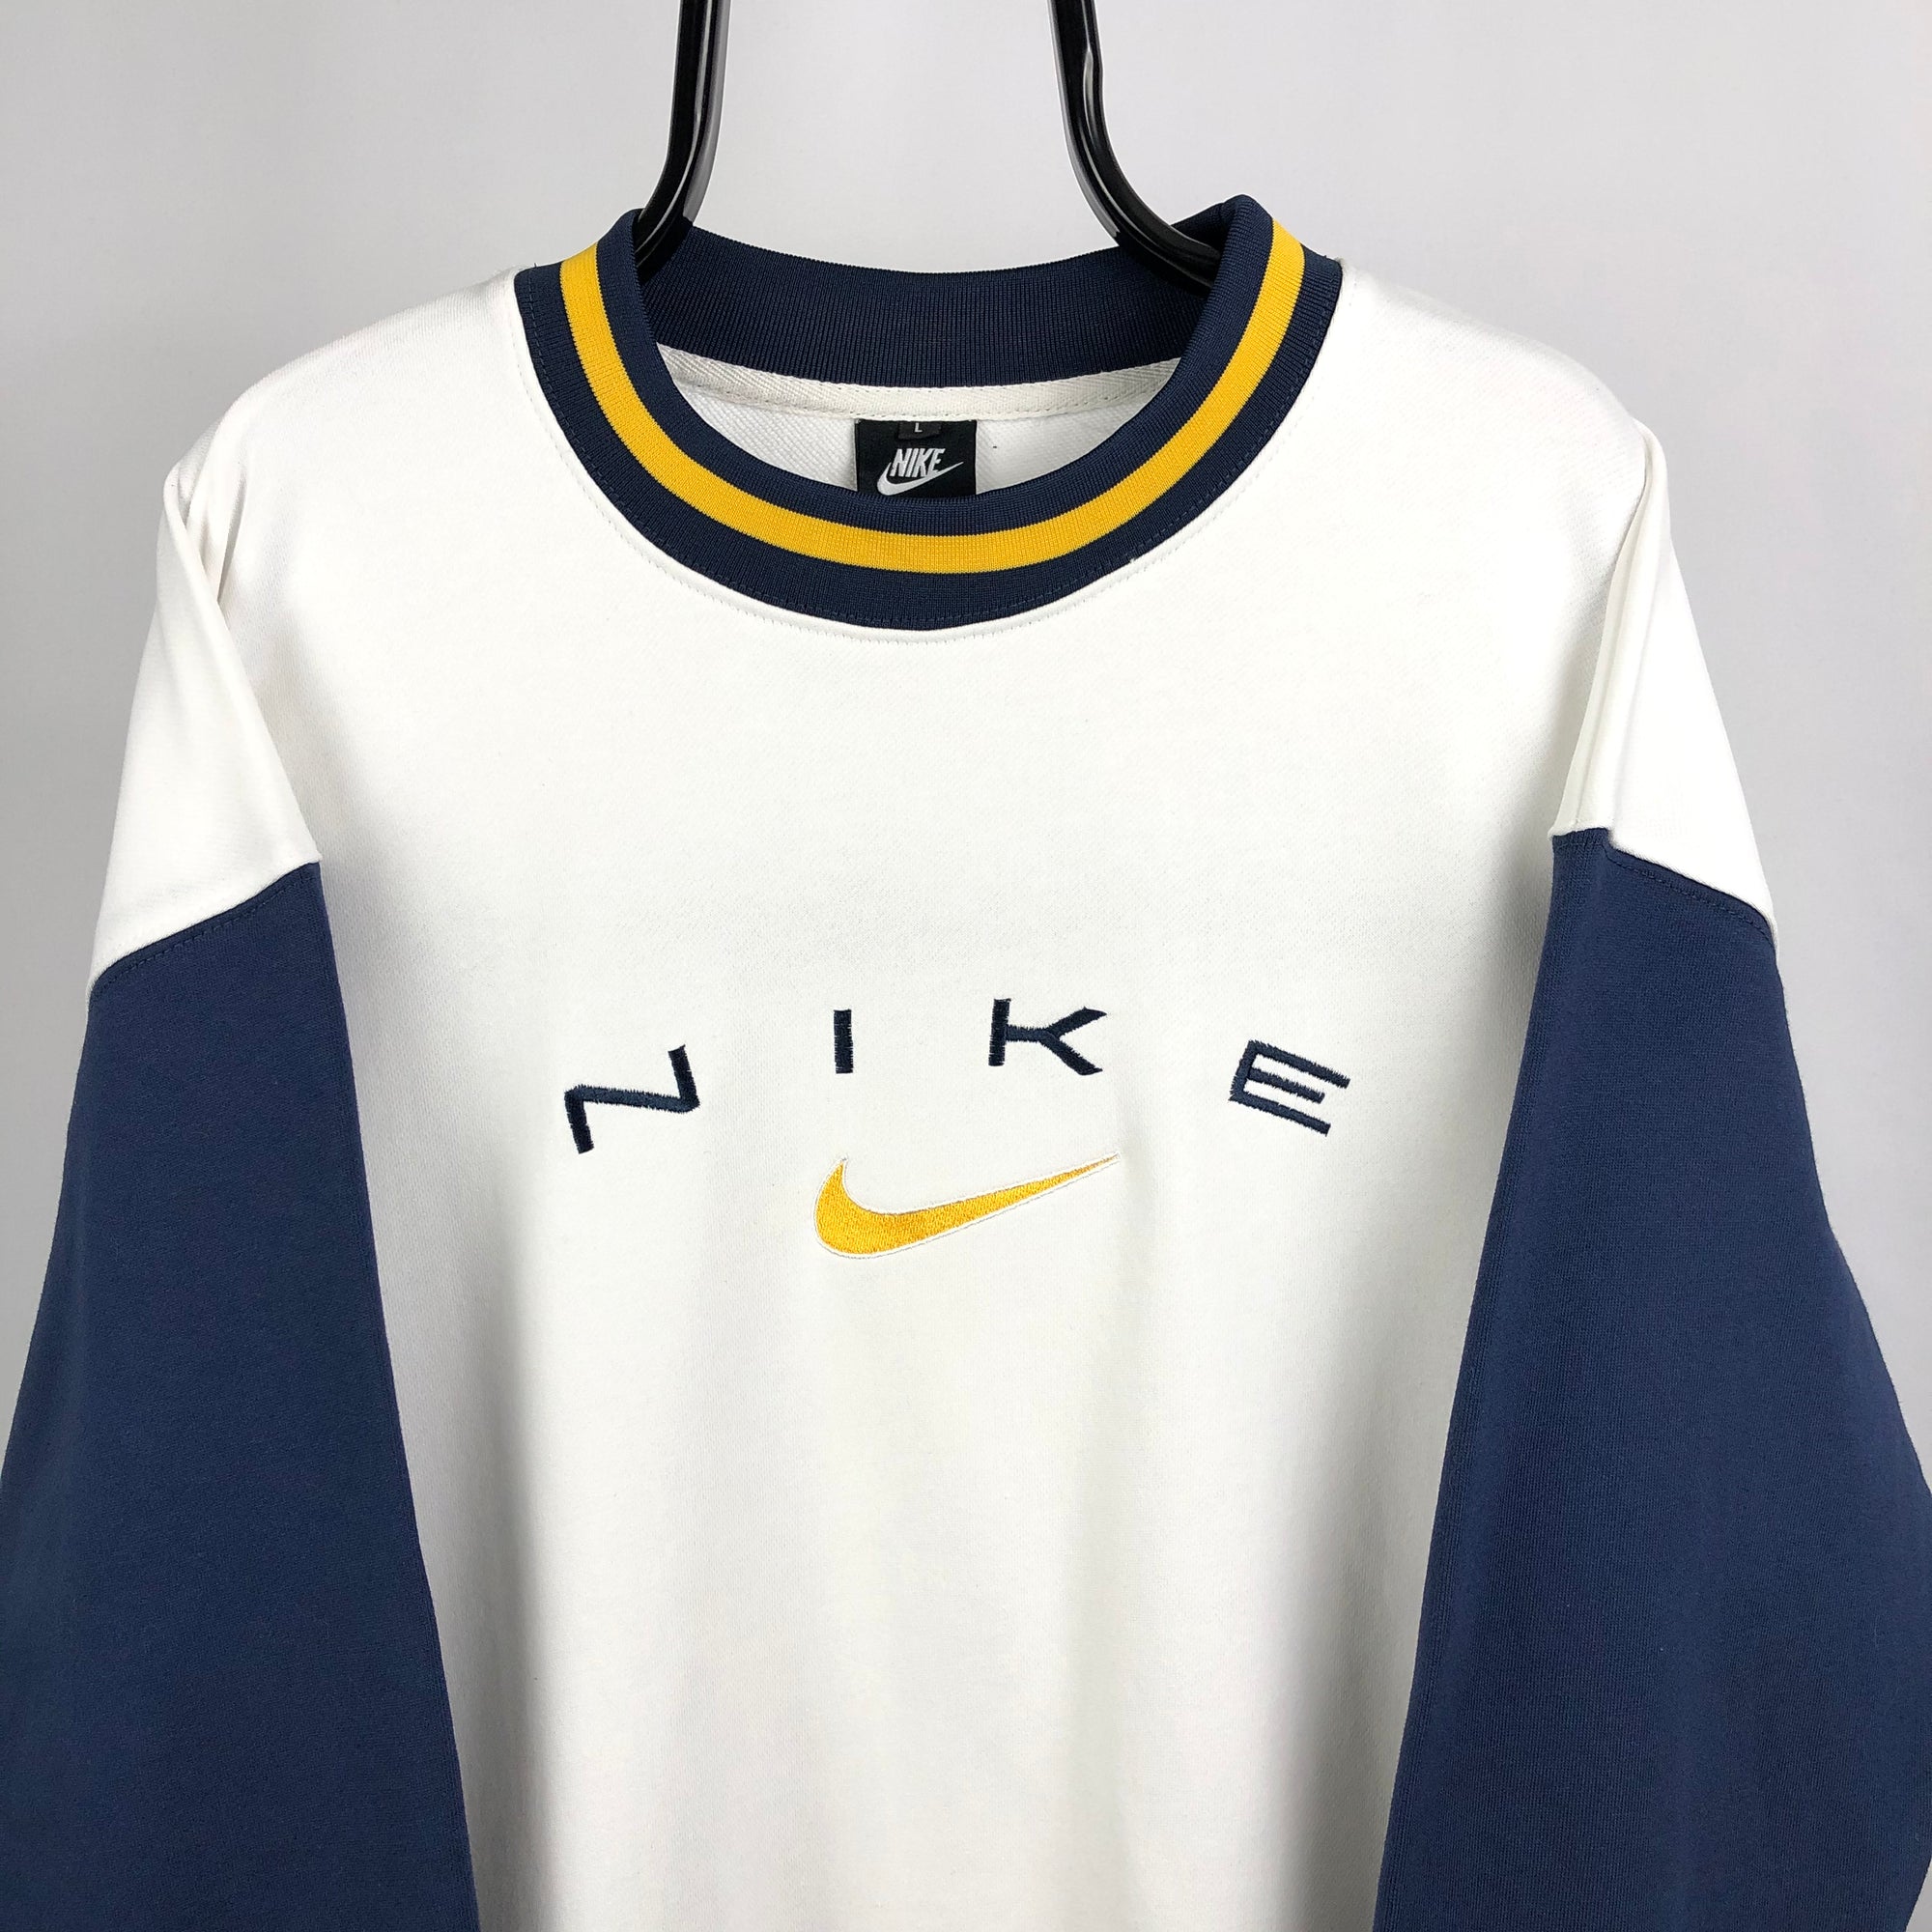 Nike Spellout Sweatshirt in White/Navy/Yellow - Men's Large/Women's XL